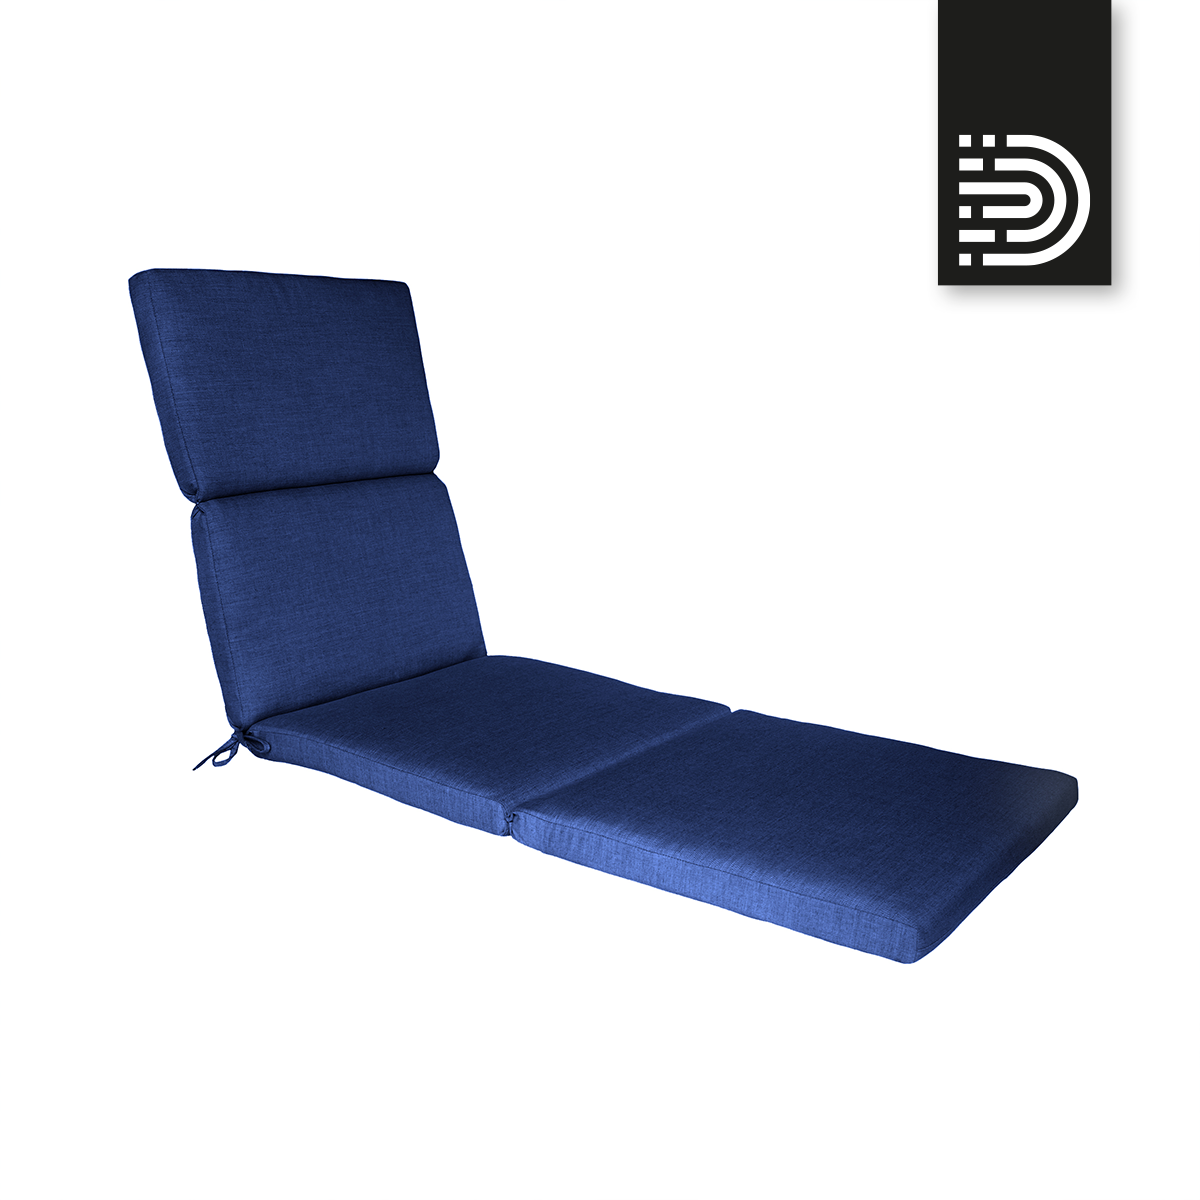 LP01 Chaise Lounge Cushion Pad - Canvas Navy 5439-0000 